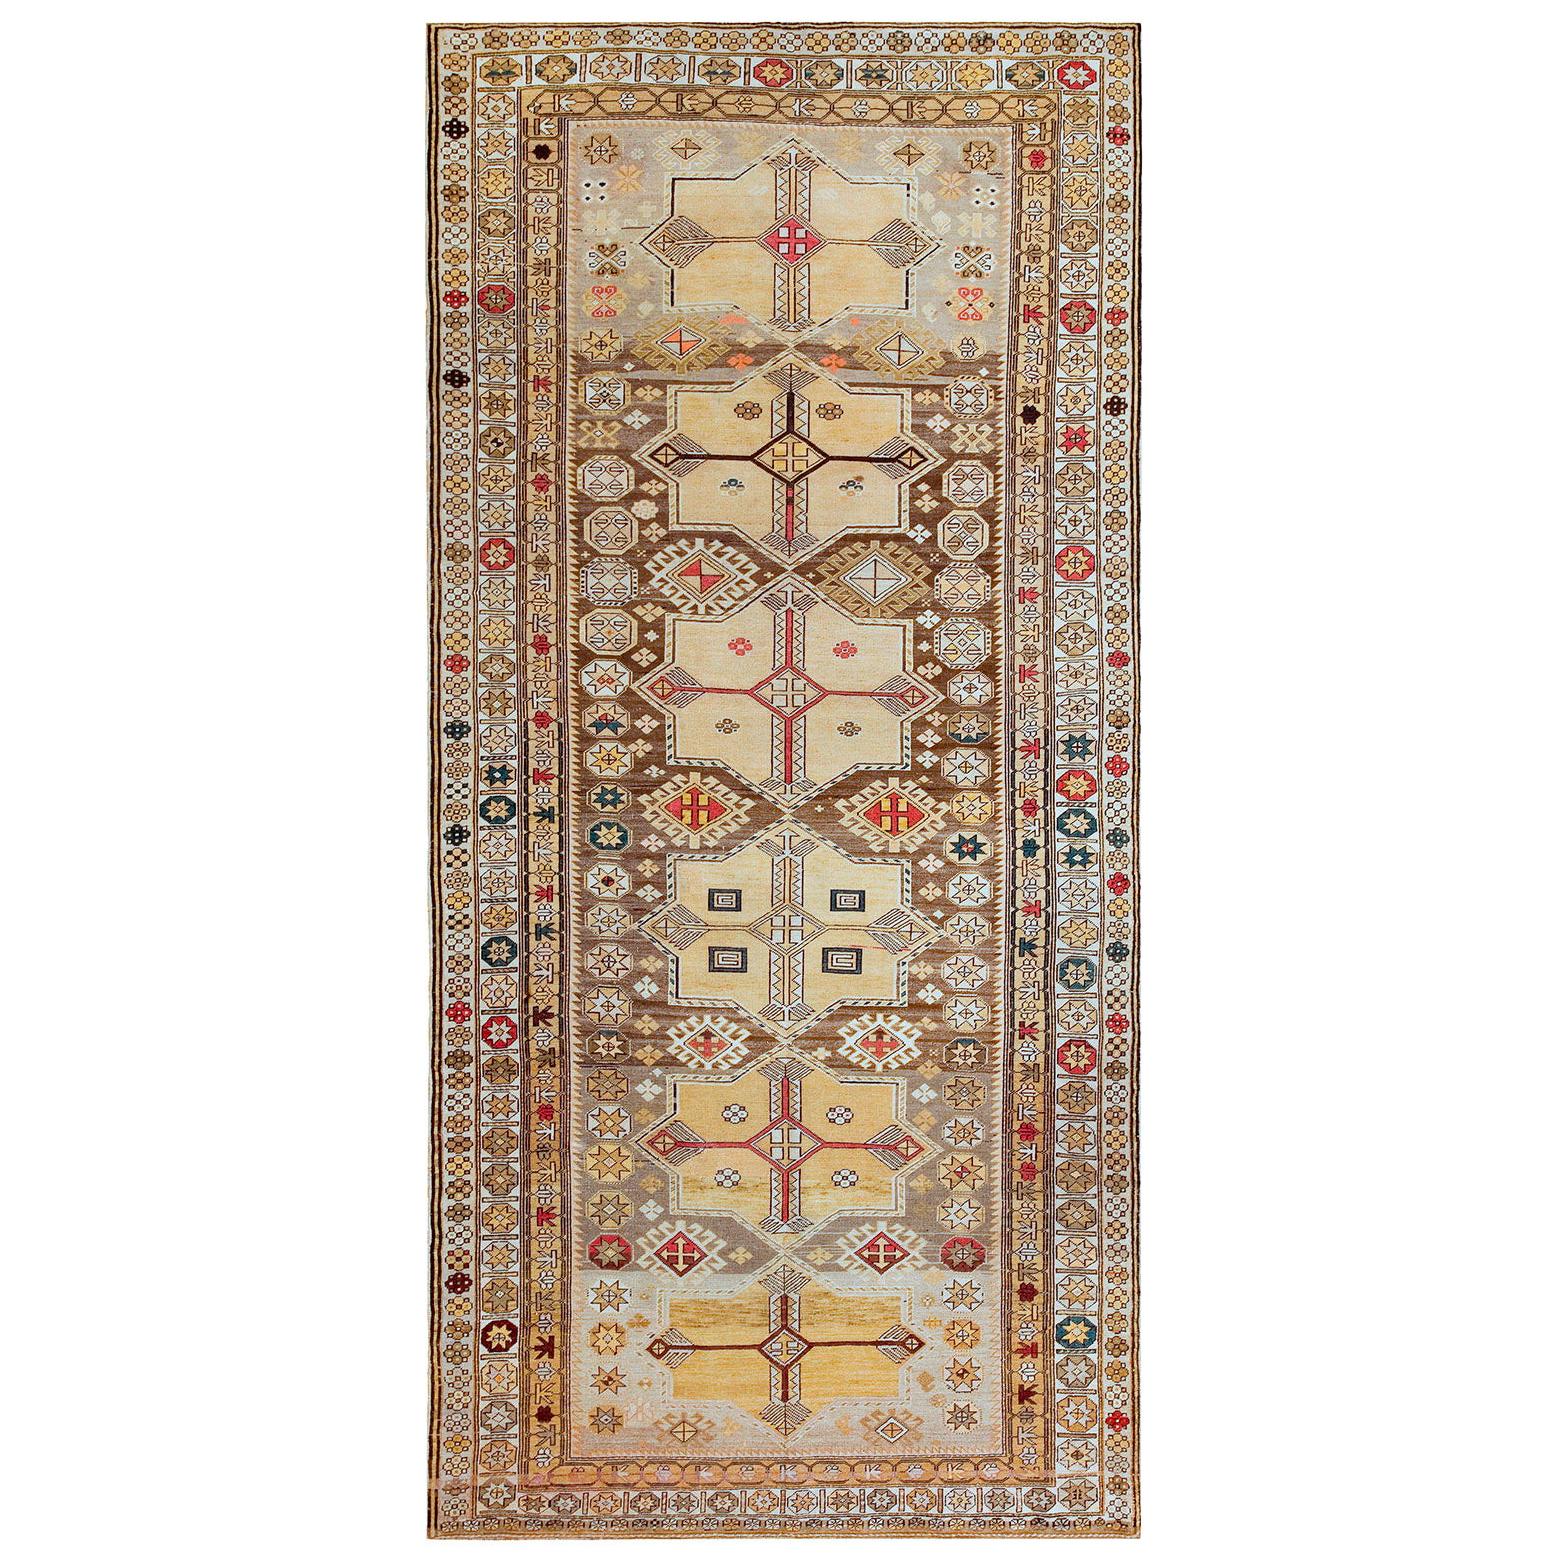 Late 19th Century Caucasian Shirvan Carpet ( 4'10" x 10'3" - 147 x 312 )